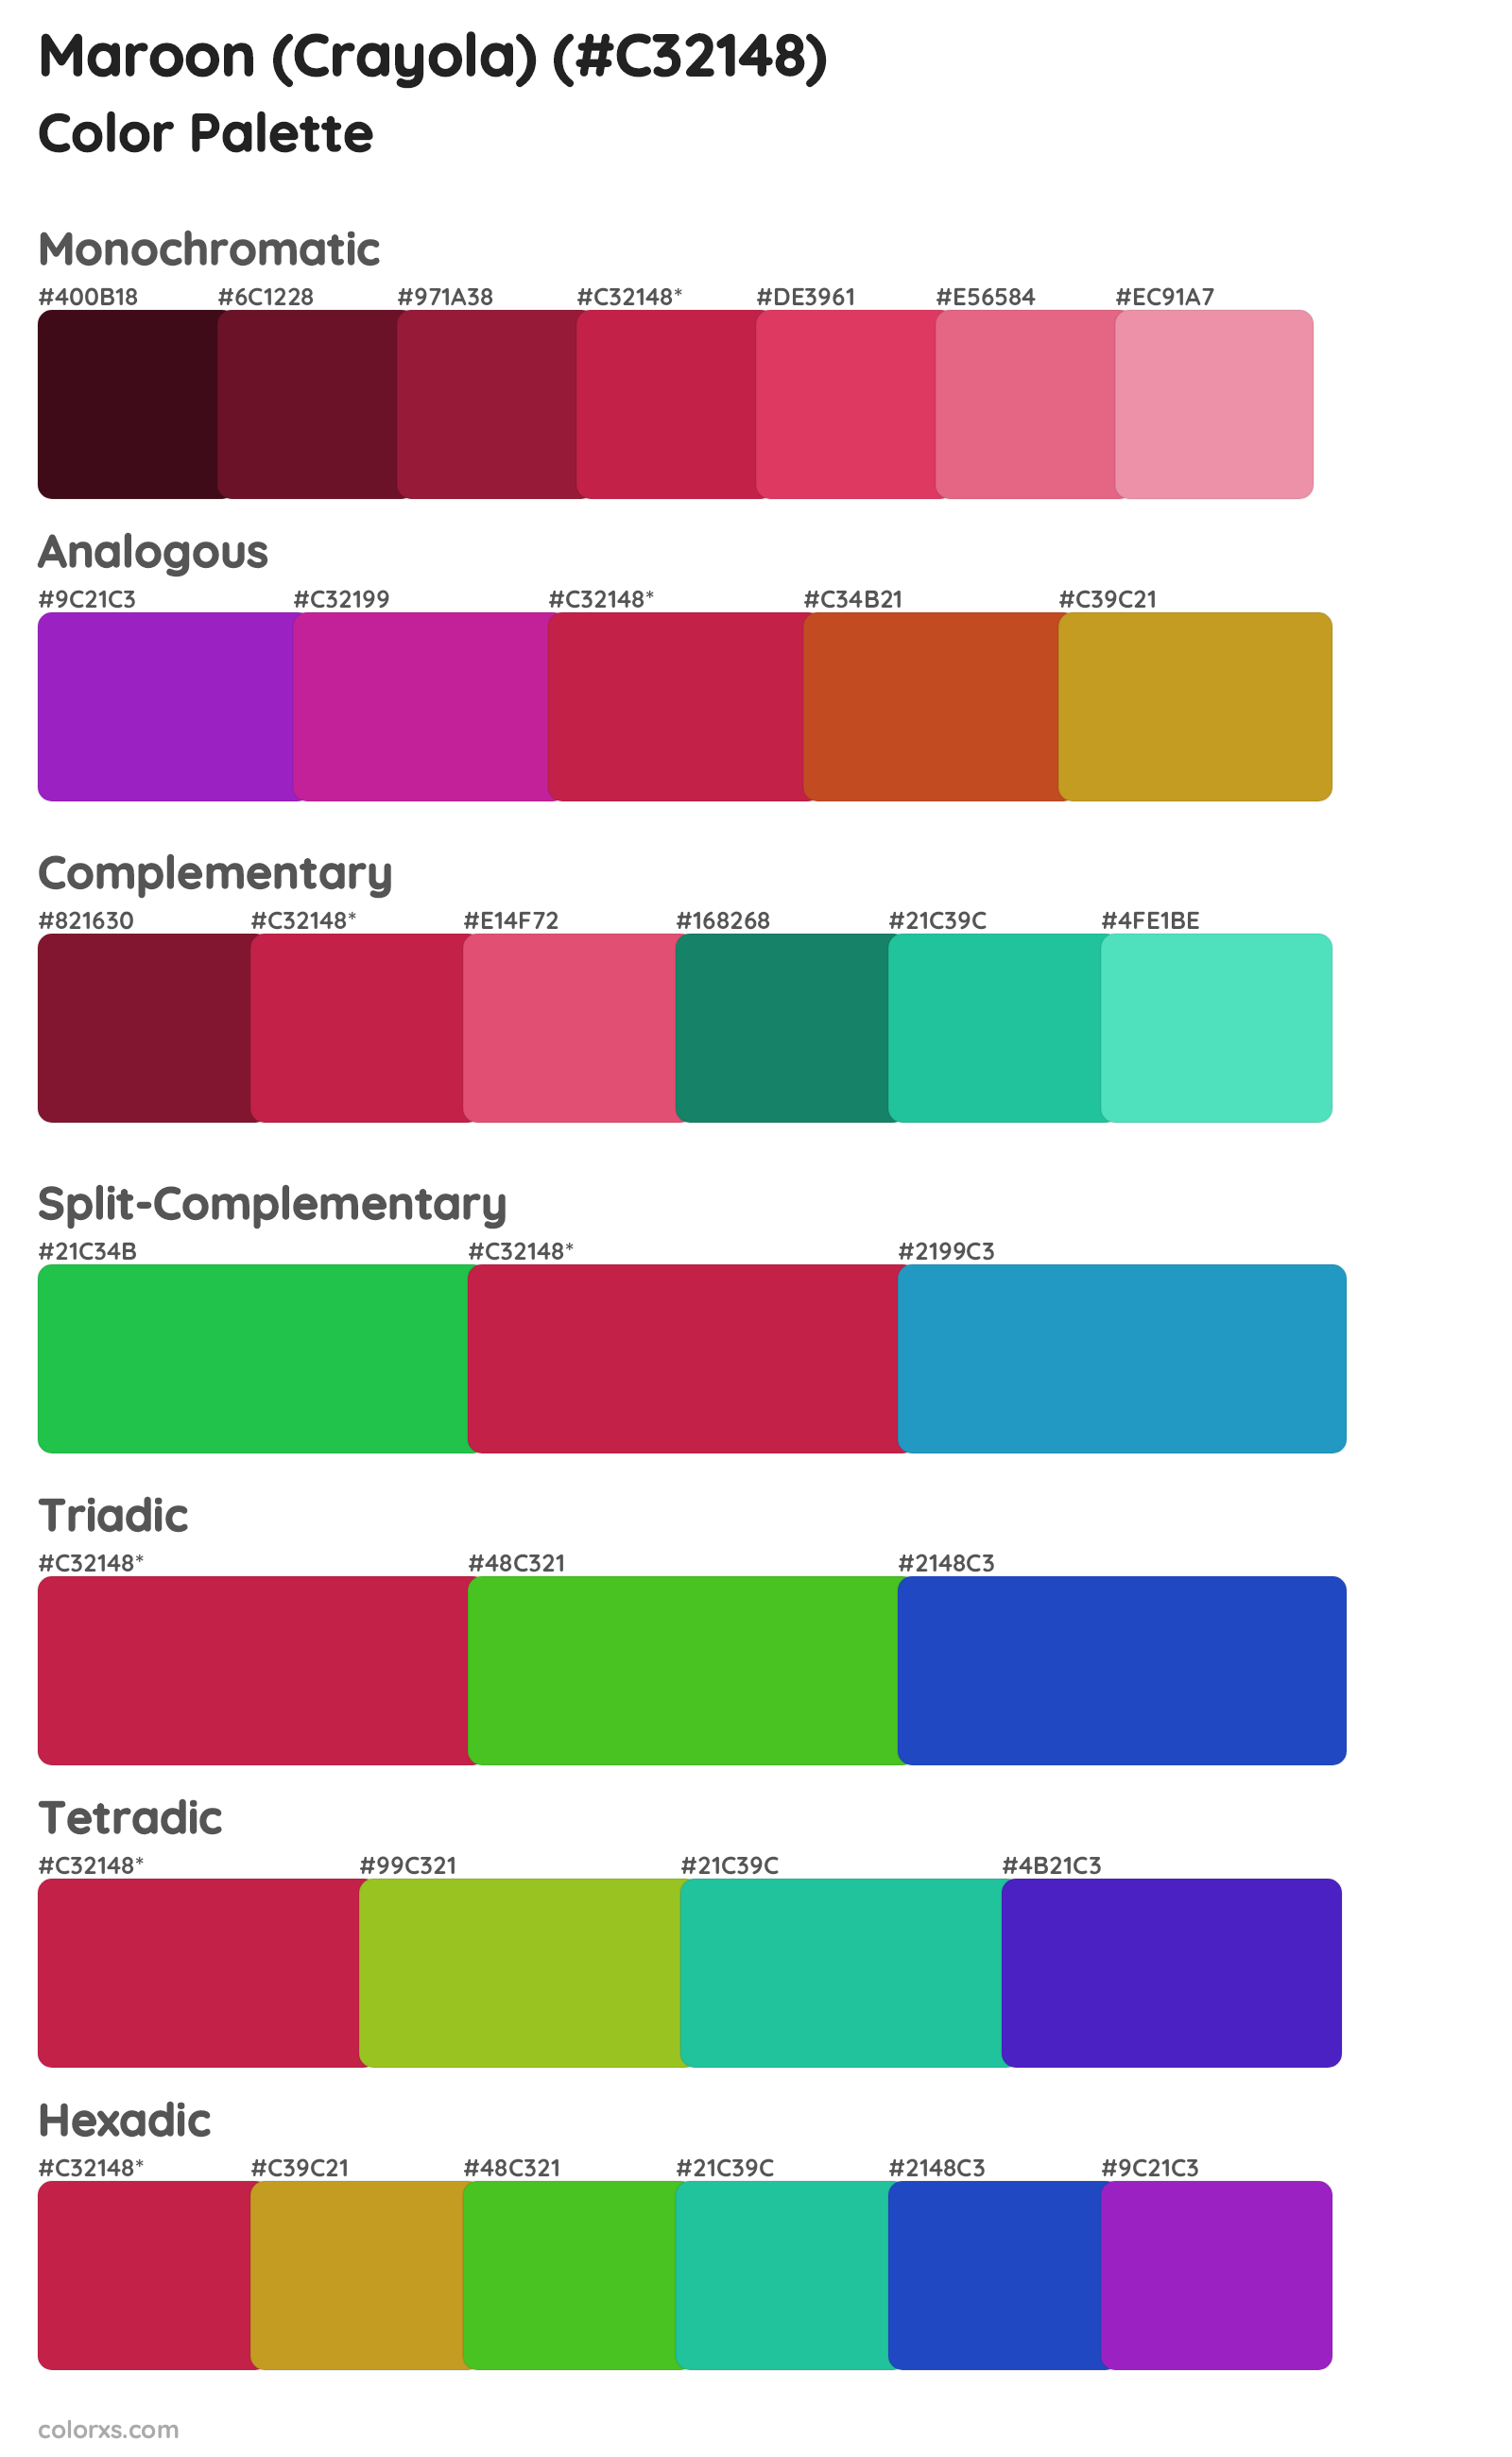 Maroon (Crayola) Color Scheme Palettes